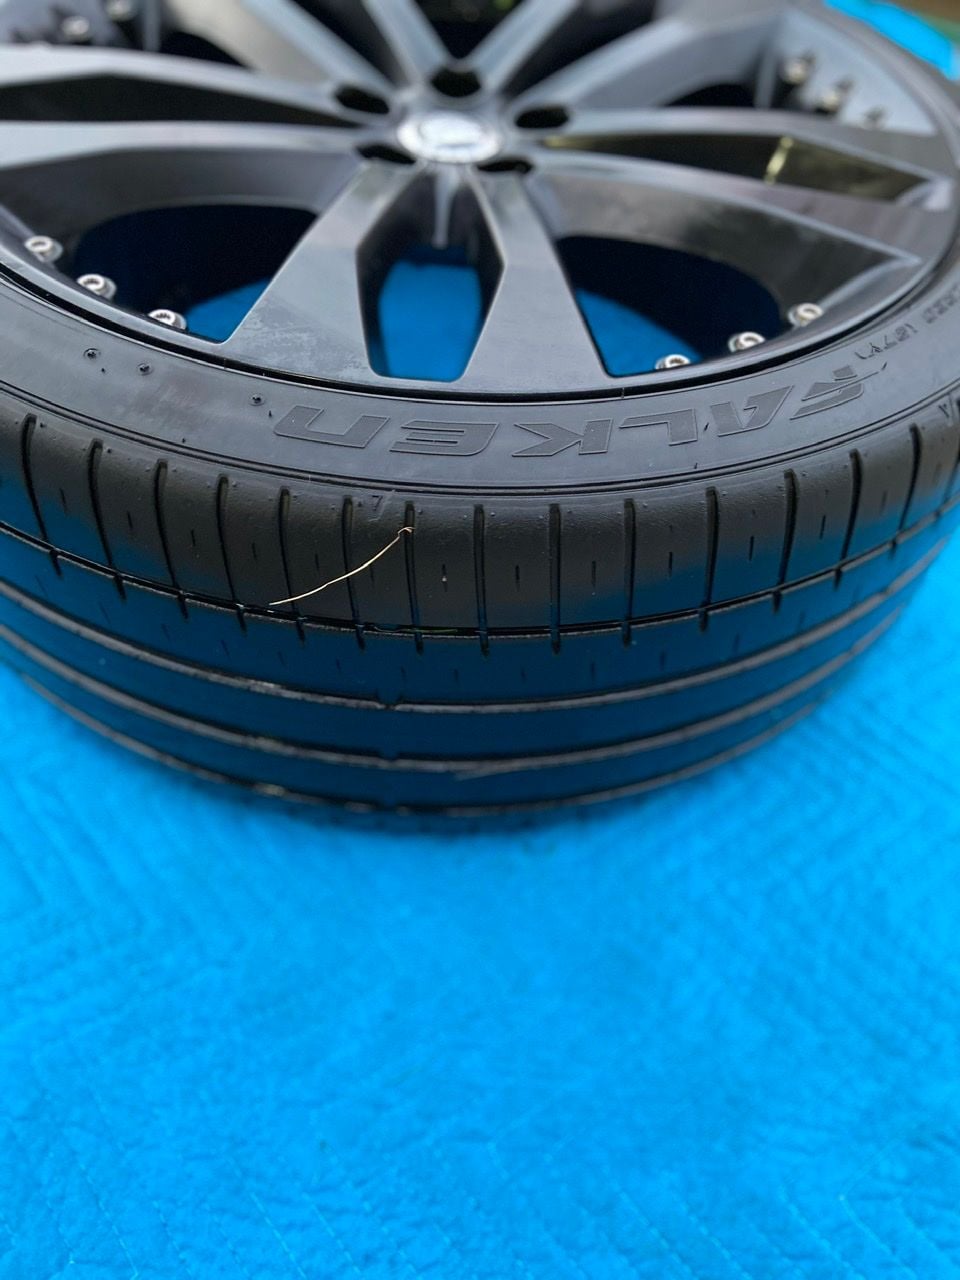 Wheels and Tires/Axles - Jaguar F-TYPE Tornado 20'' wheels semigloss black. - Used - 2015 Jaguar F-Type - Troy, MI 48085, United States